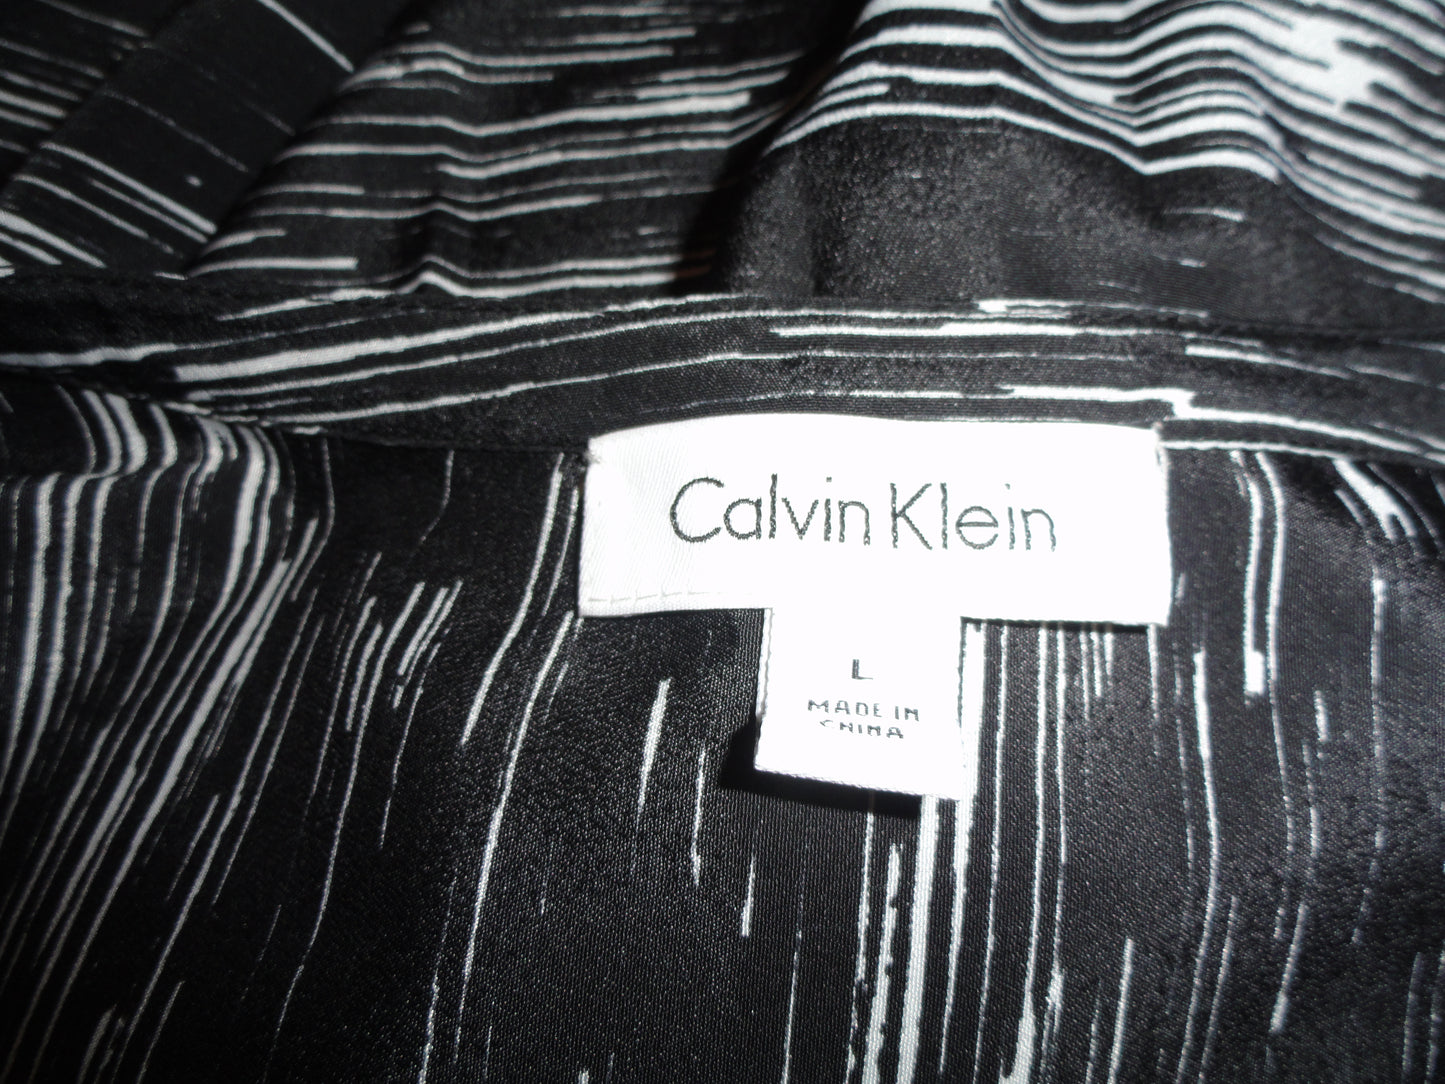 Calvin Klein Top Black & White L SKU 000188-3